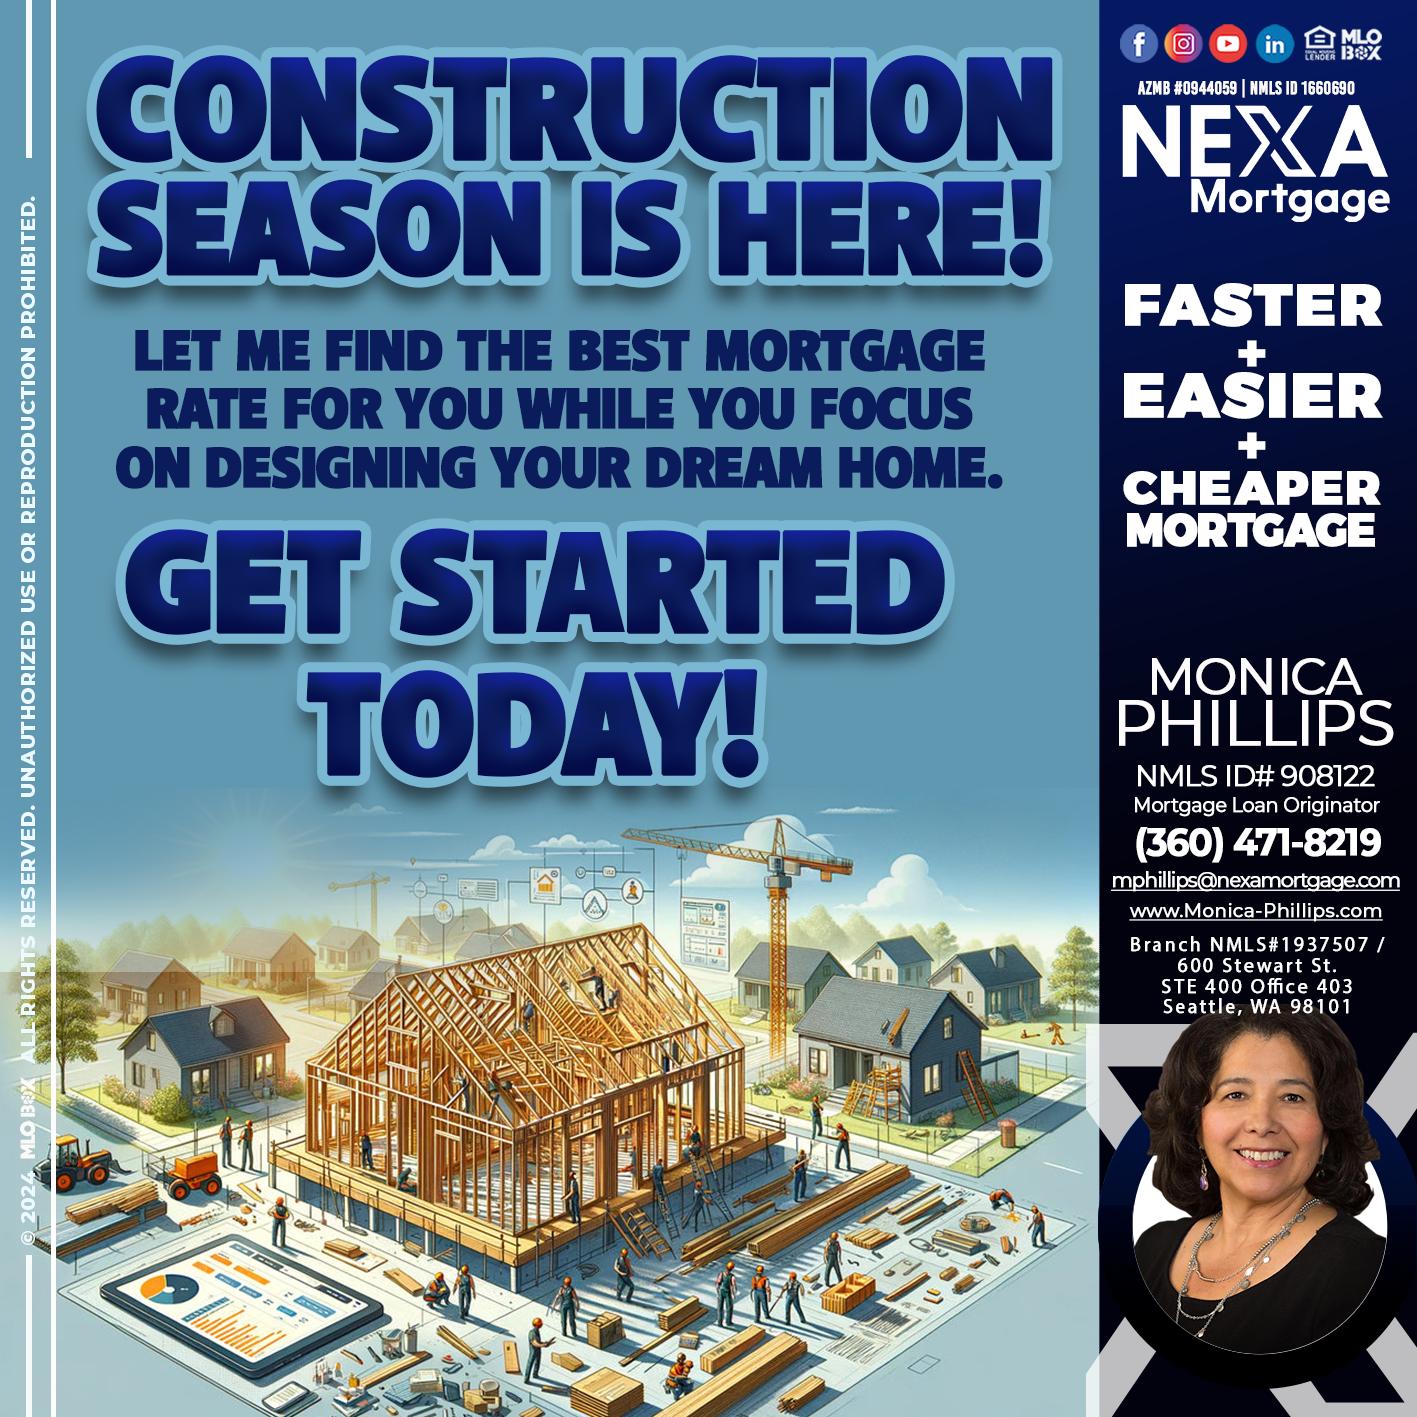 CONSTRUCTION - Monica Phillips -Loan Officer